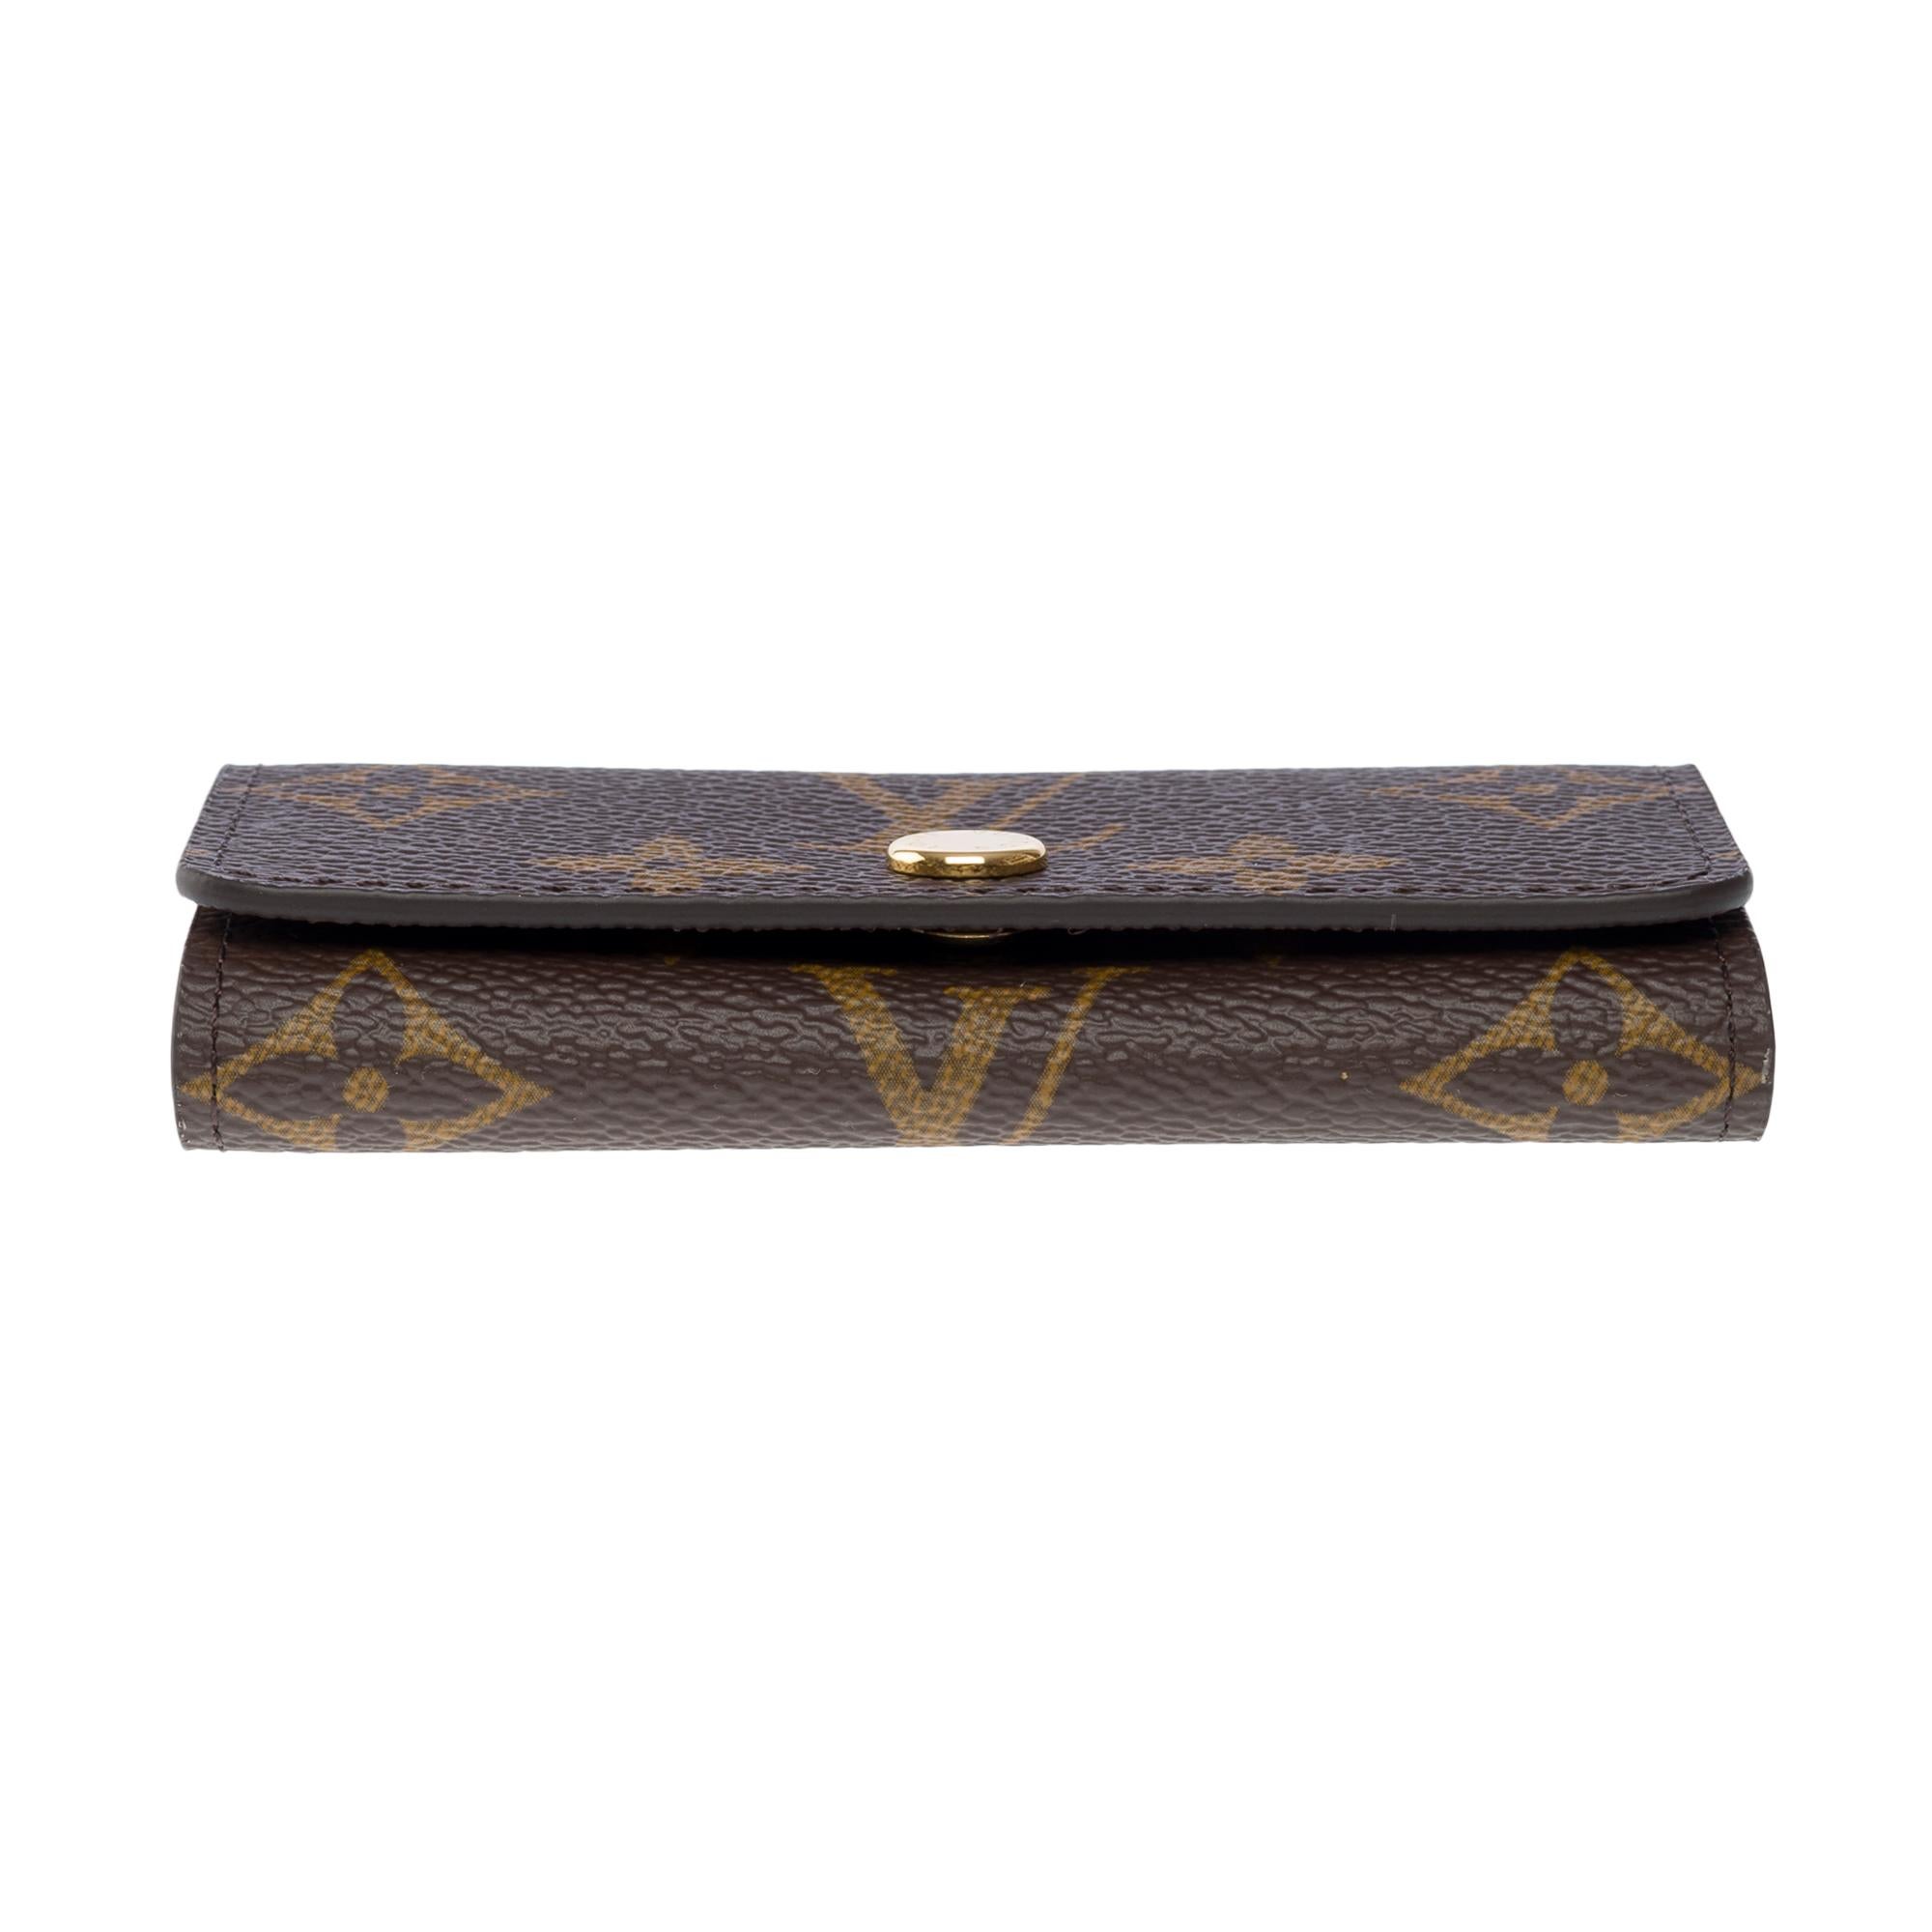 New Louis Vuitton Keychain in brown monogram canvas, GHW For Sale 5